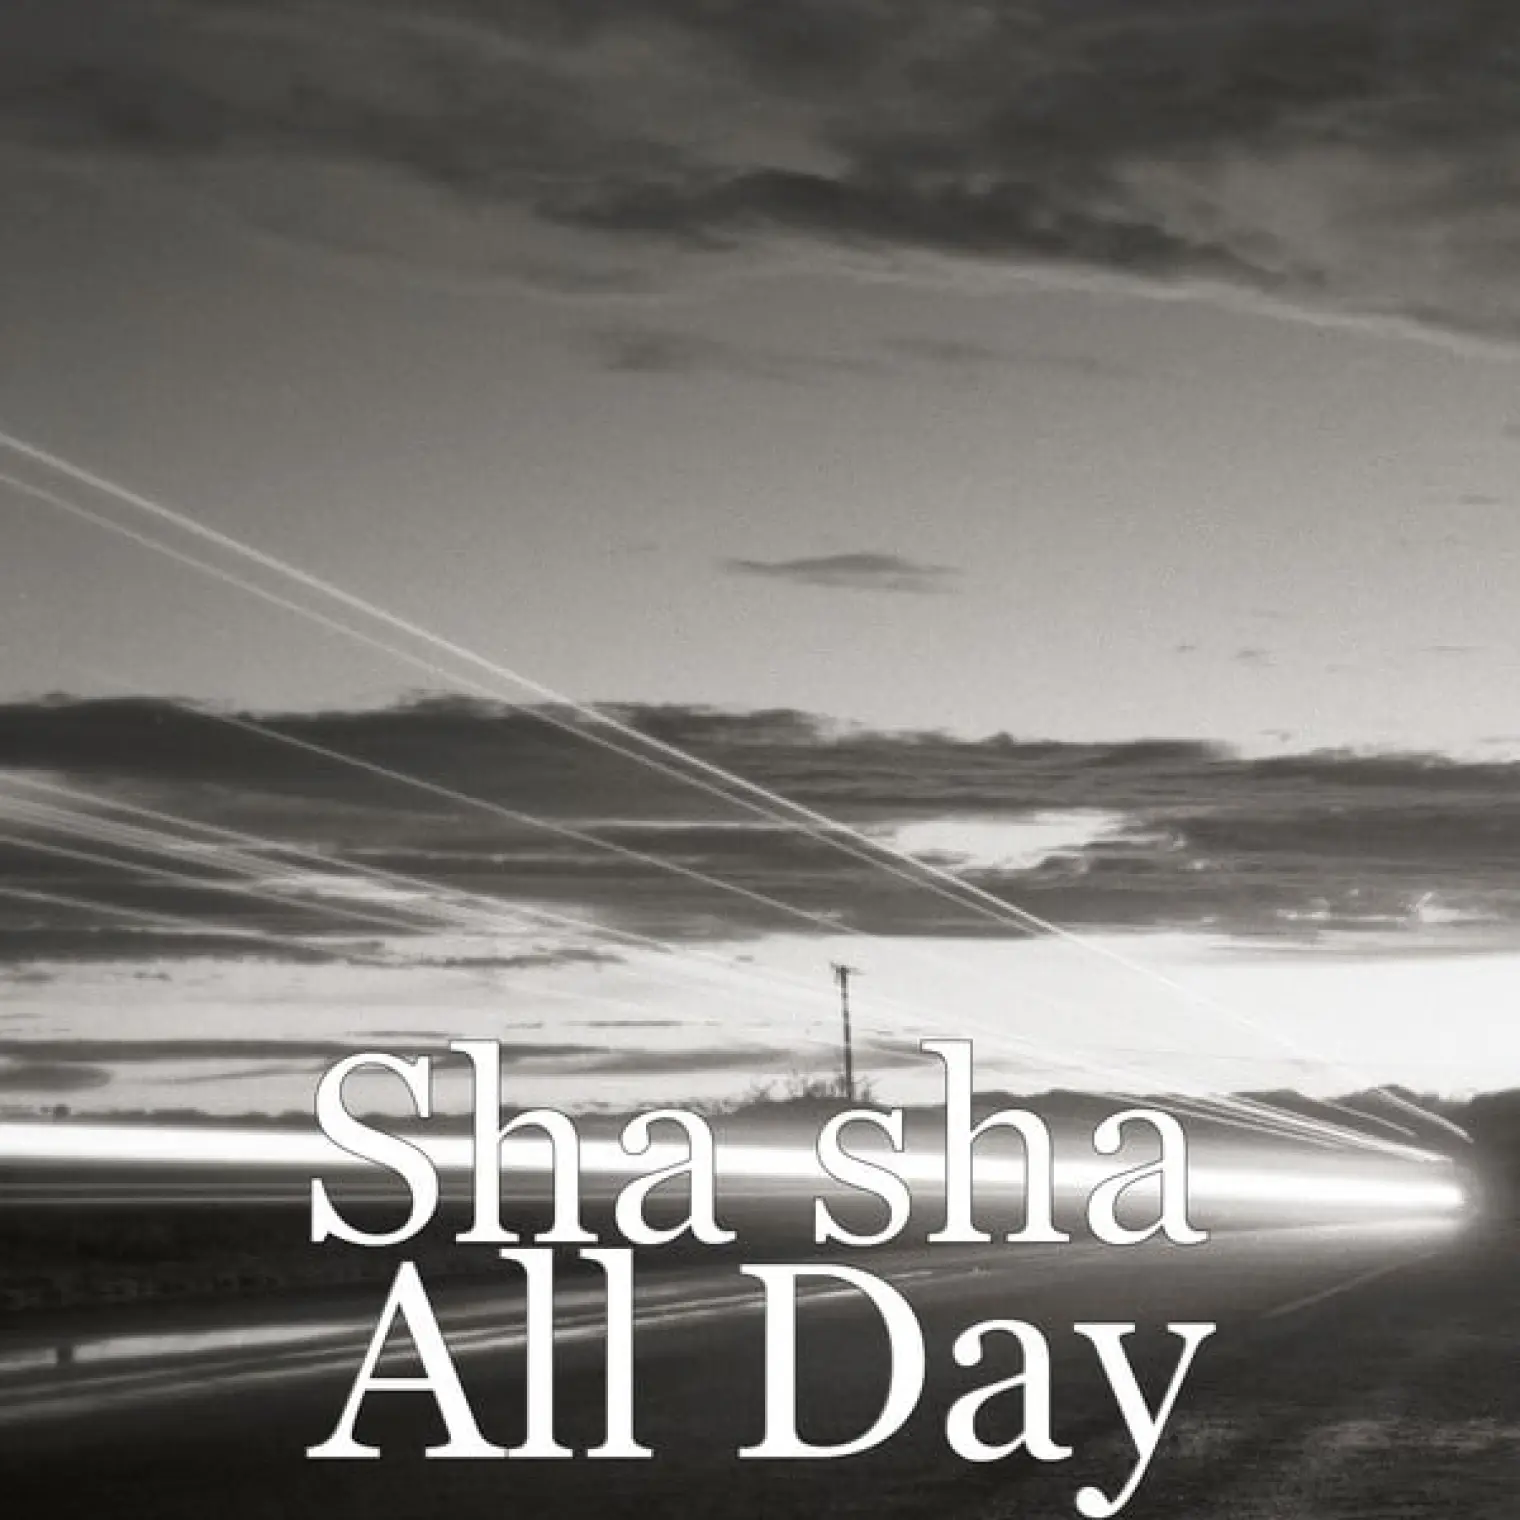 All Day -  Sha Sha 